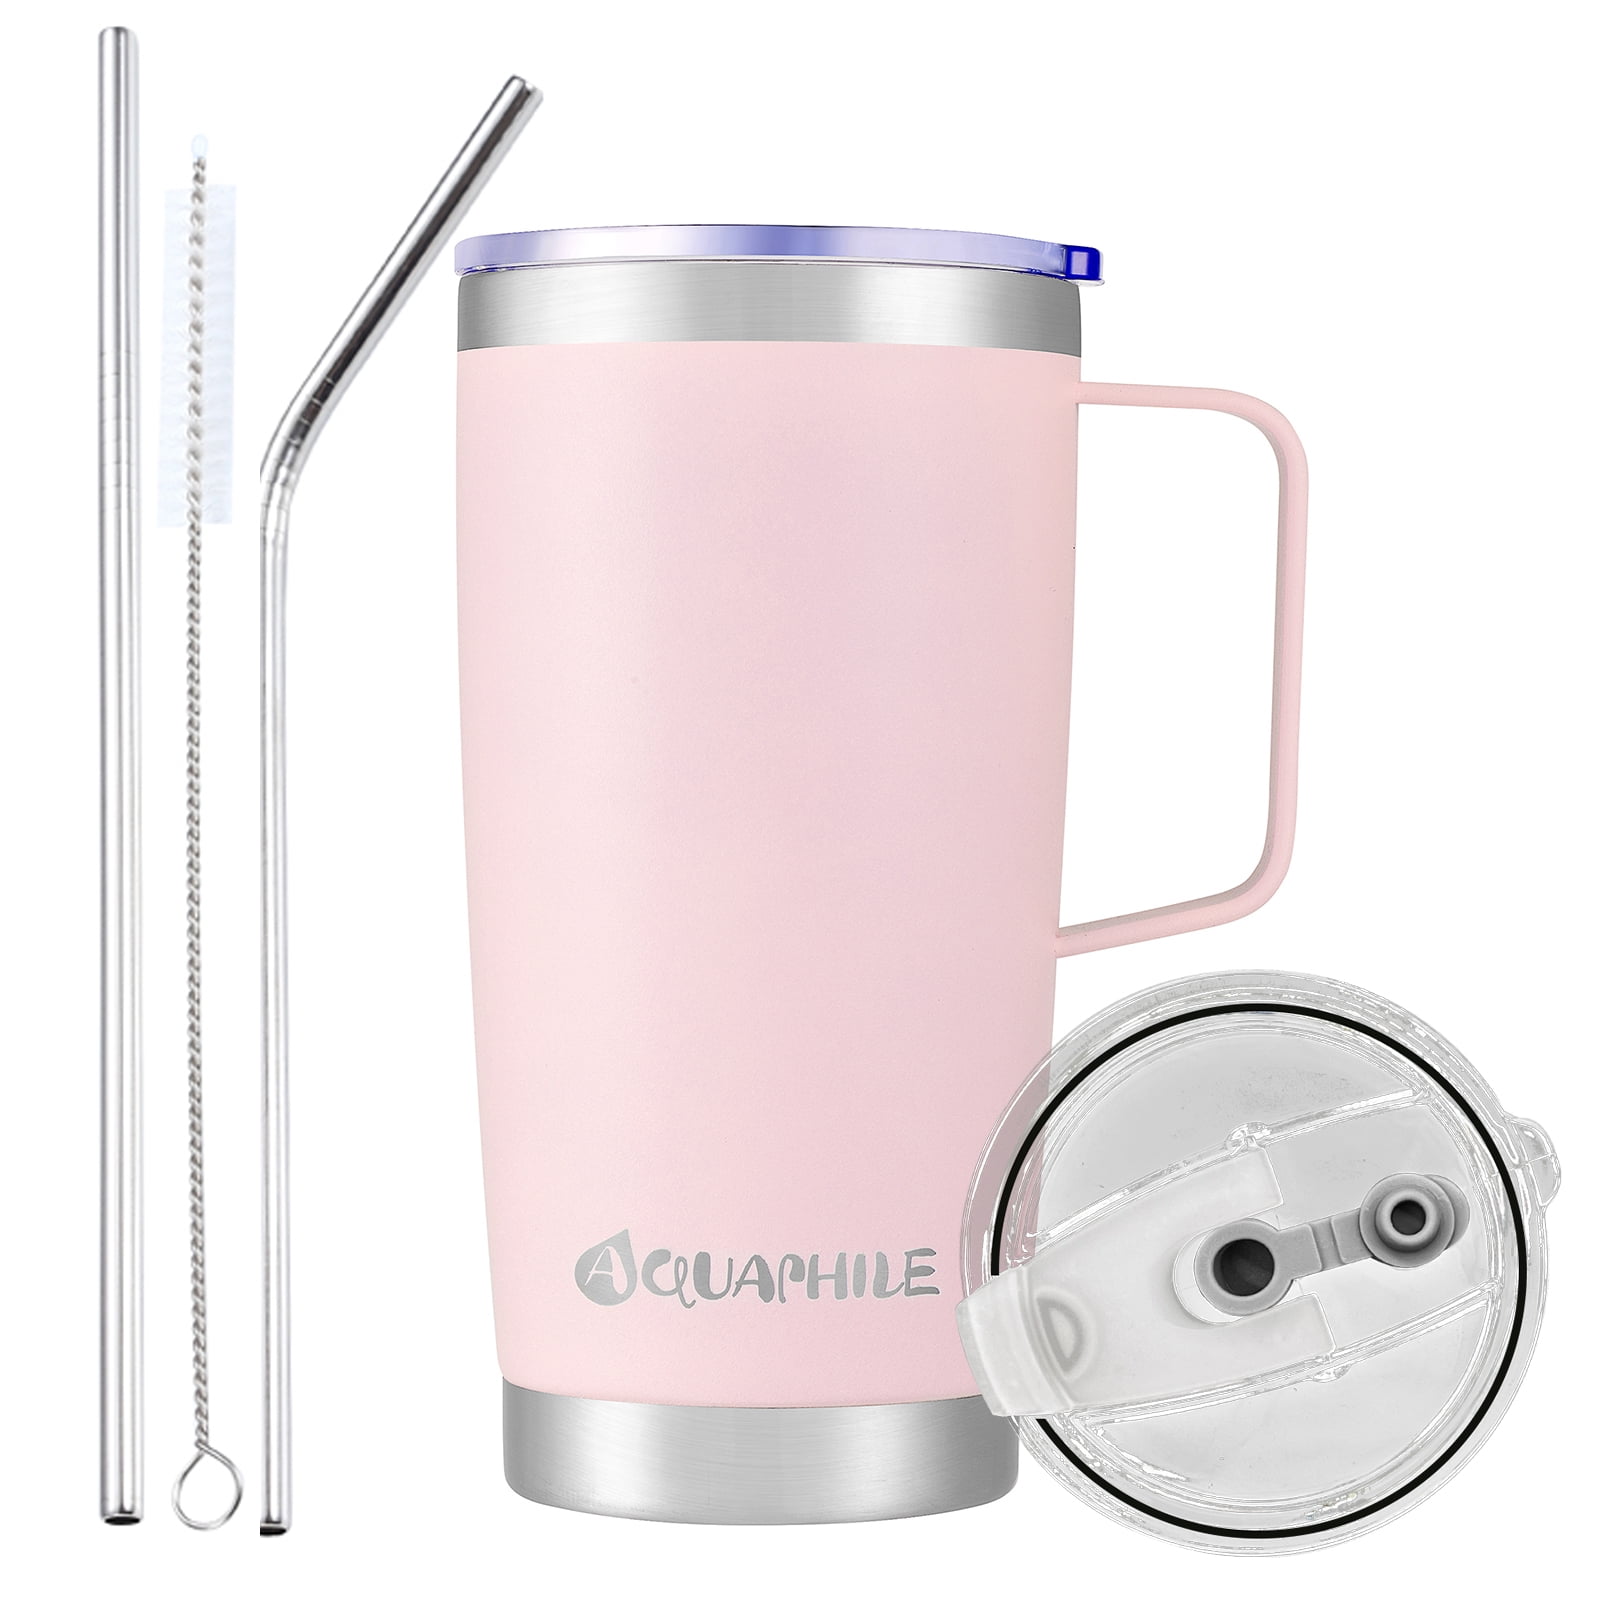 Weighted Insulated Large Mug :: heavy single handle mug with no